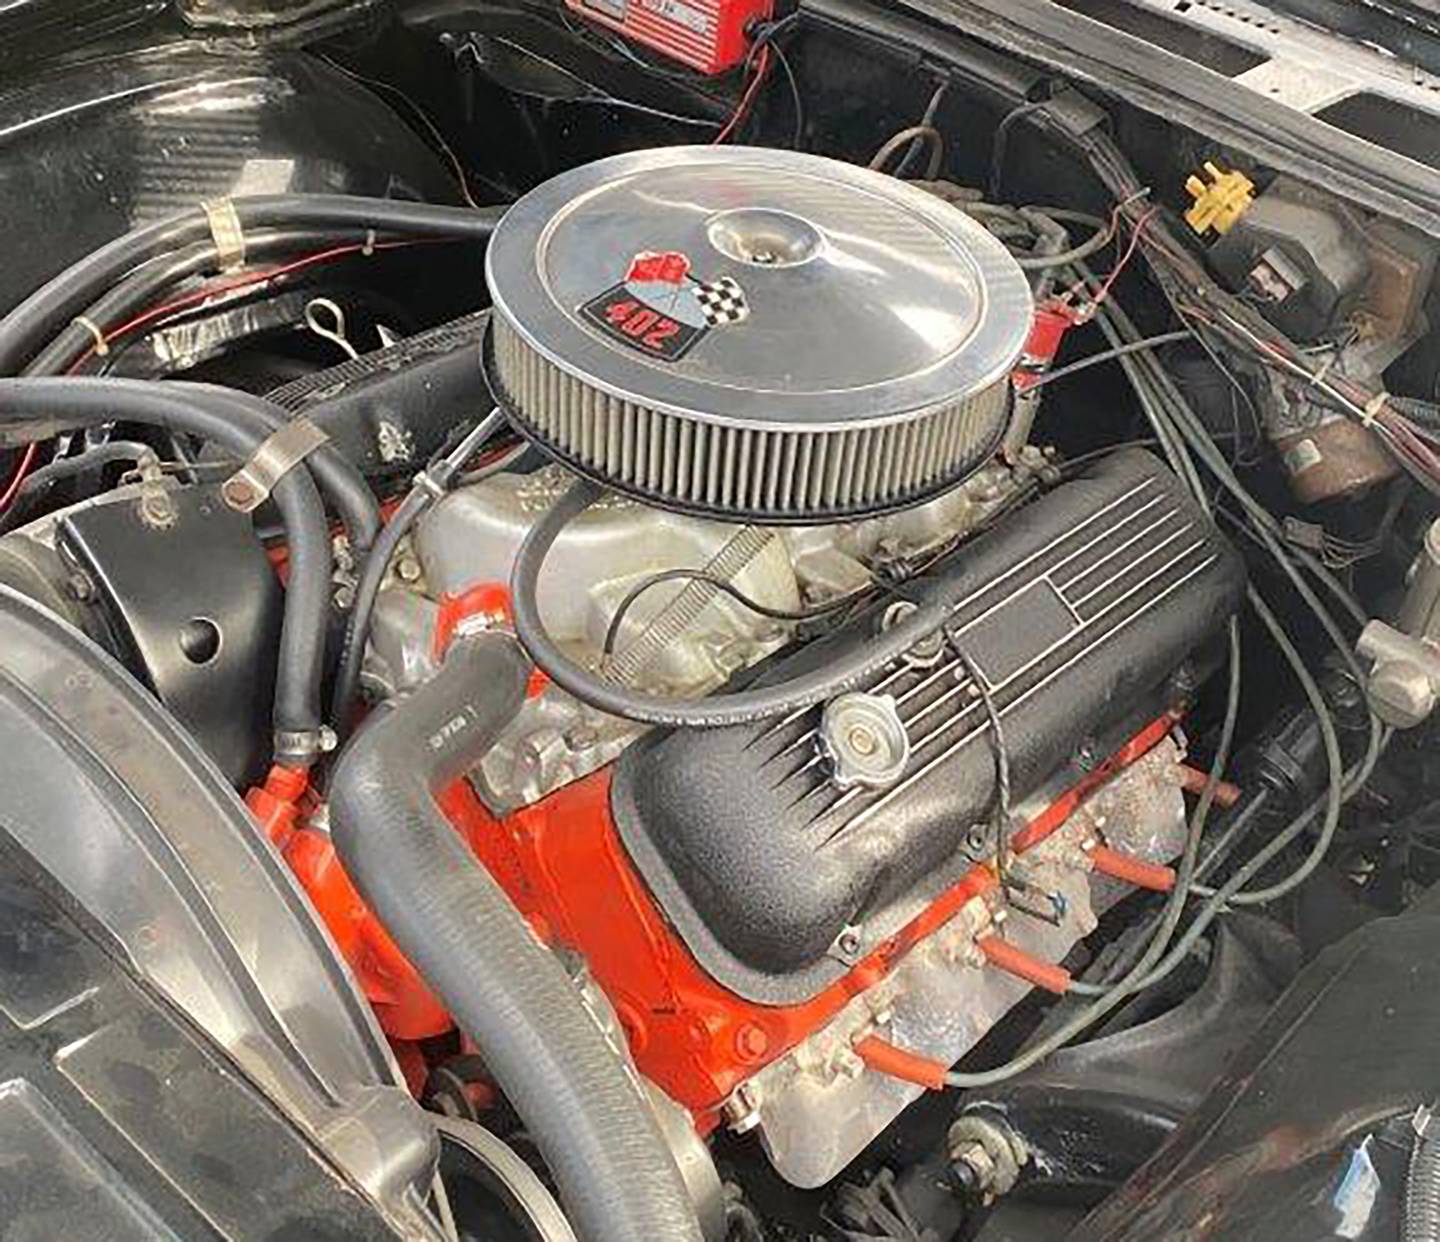 Photos by Rudy Host, Jr. - 1972 Chevy Malibu Engine